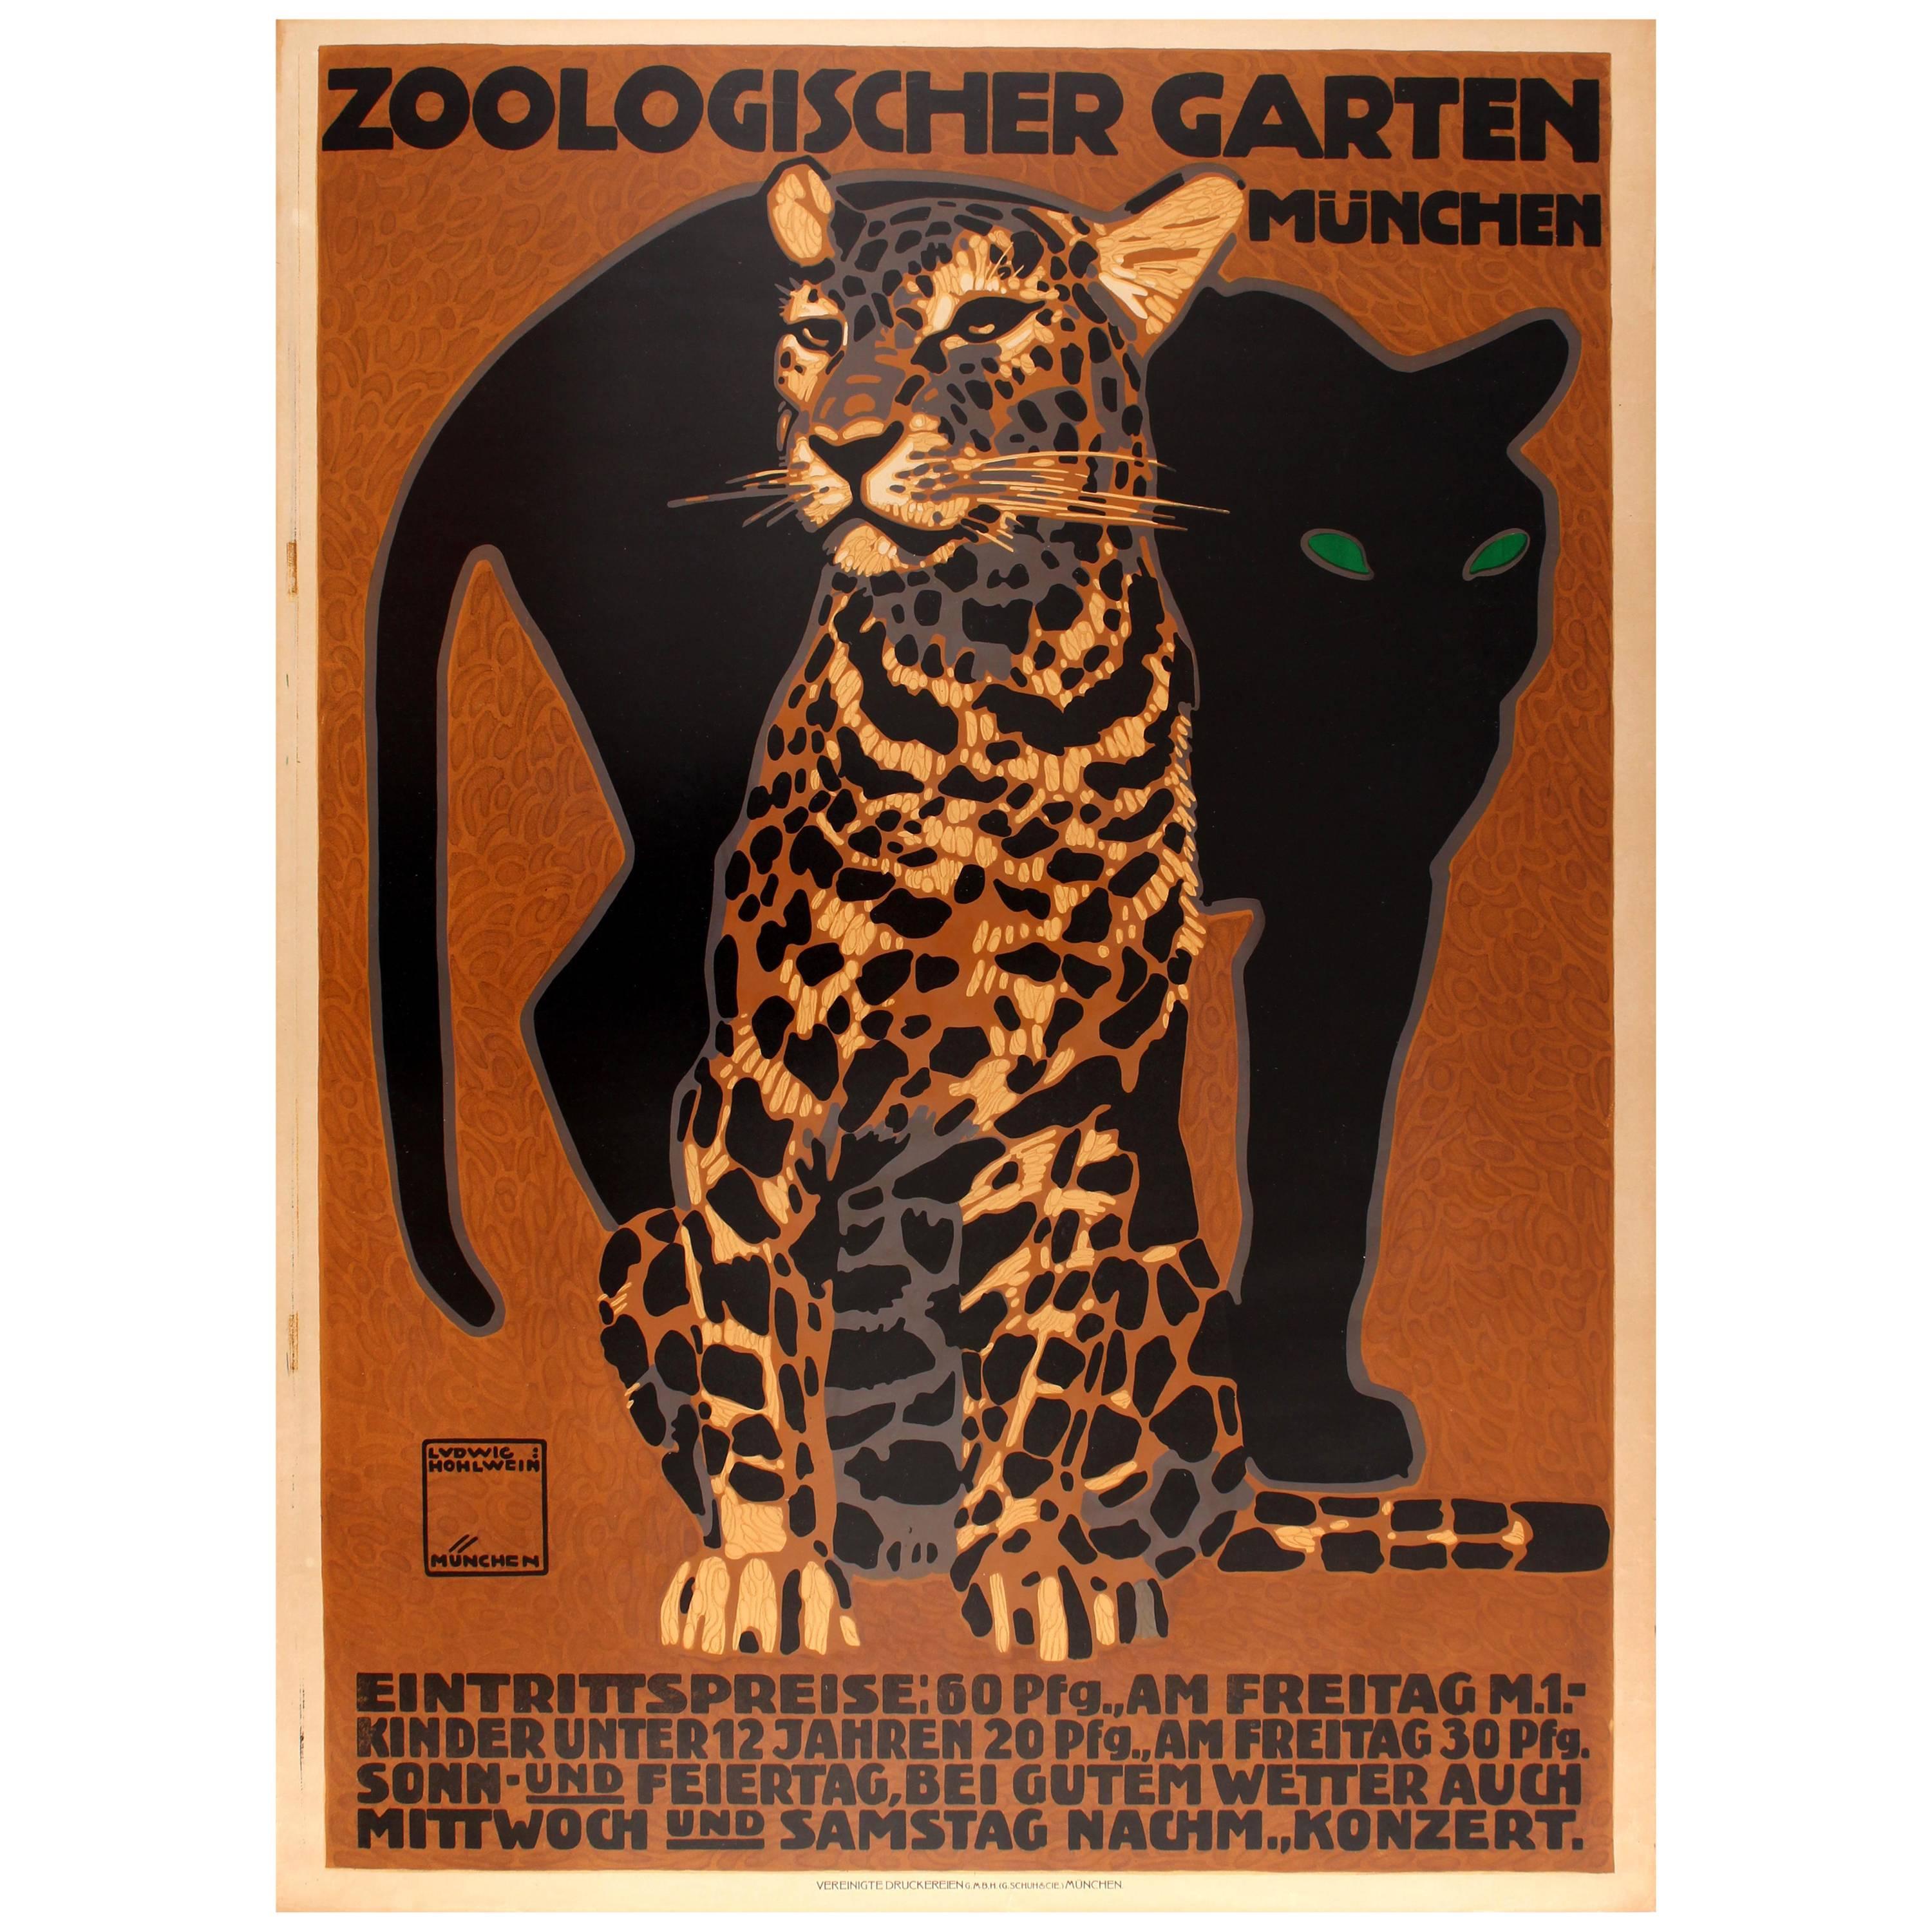 Original Antique Poster by Hohlwein for Munich Zoo - Zoologischer Garten Munchen